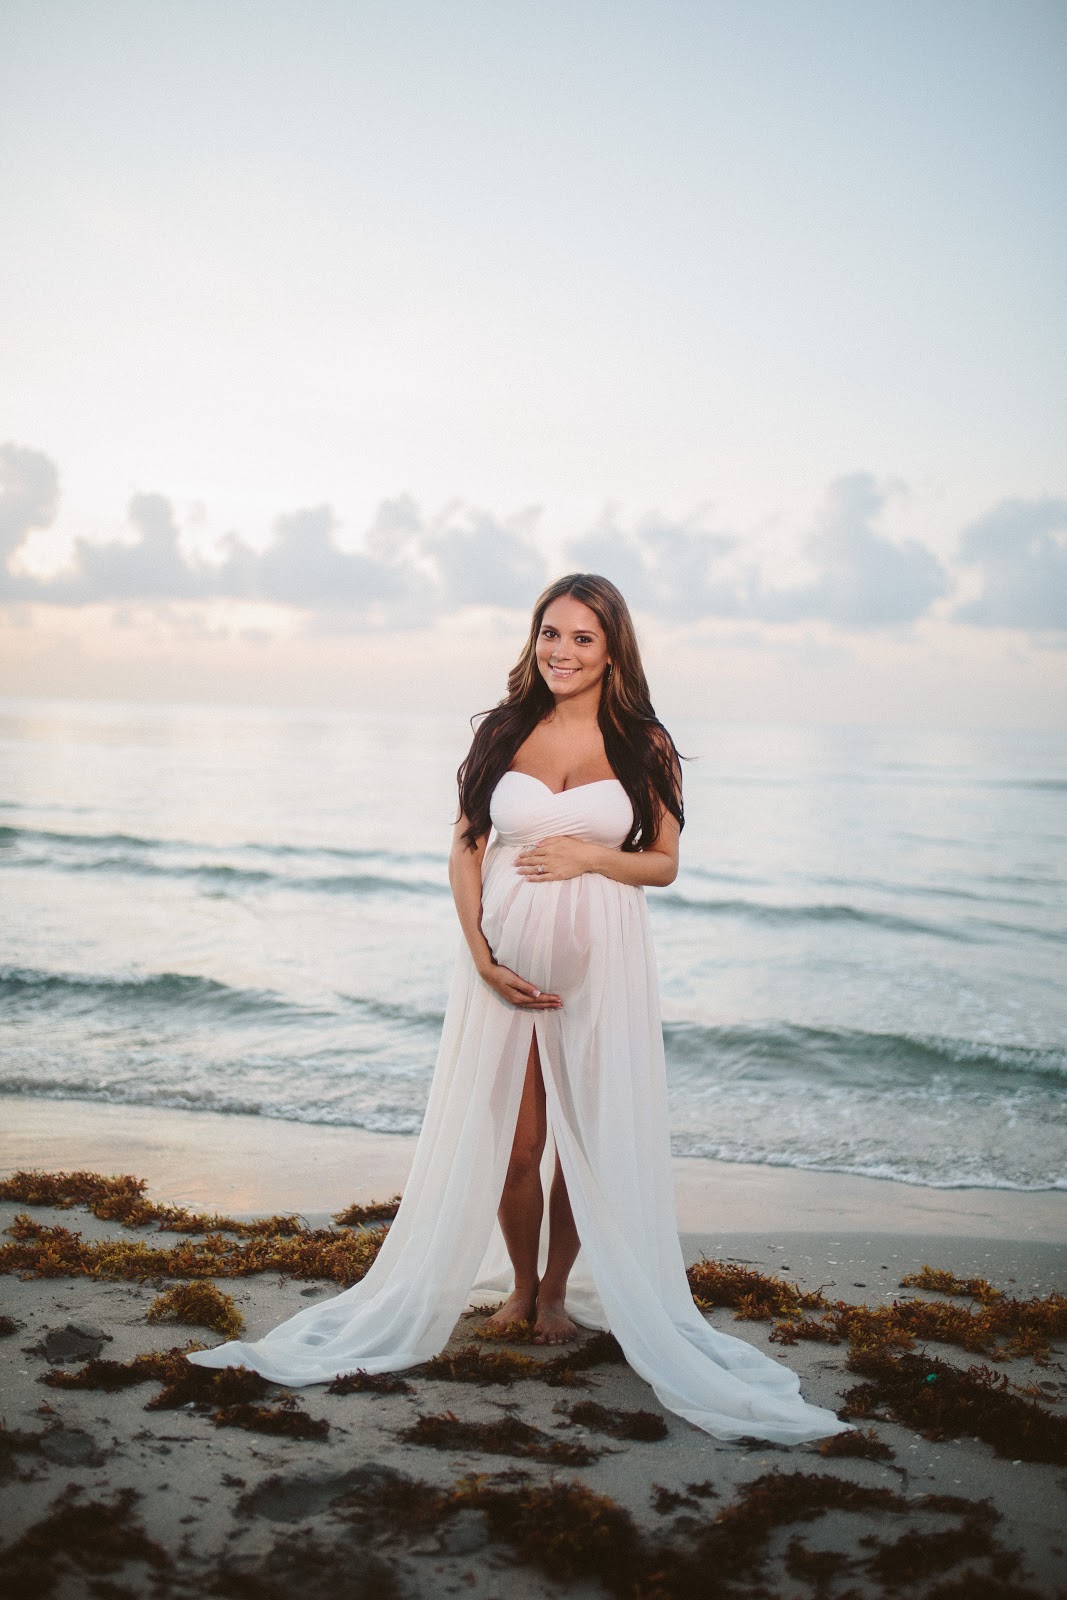 Laura & Co.: Maternity Photoshoot - Beach/Sunrise Look